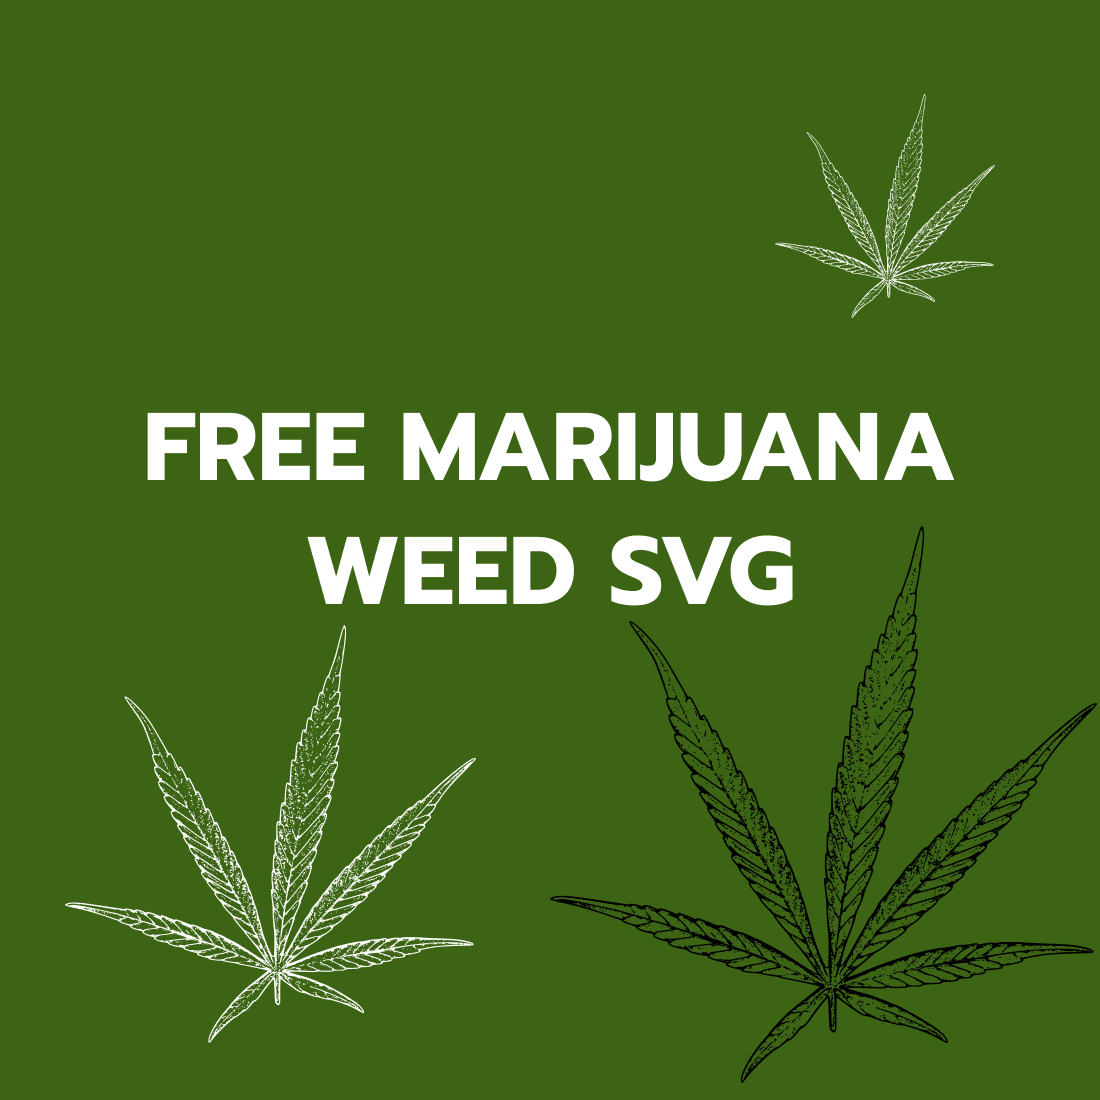 Free Marijuana Weed SVG cover.